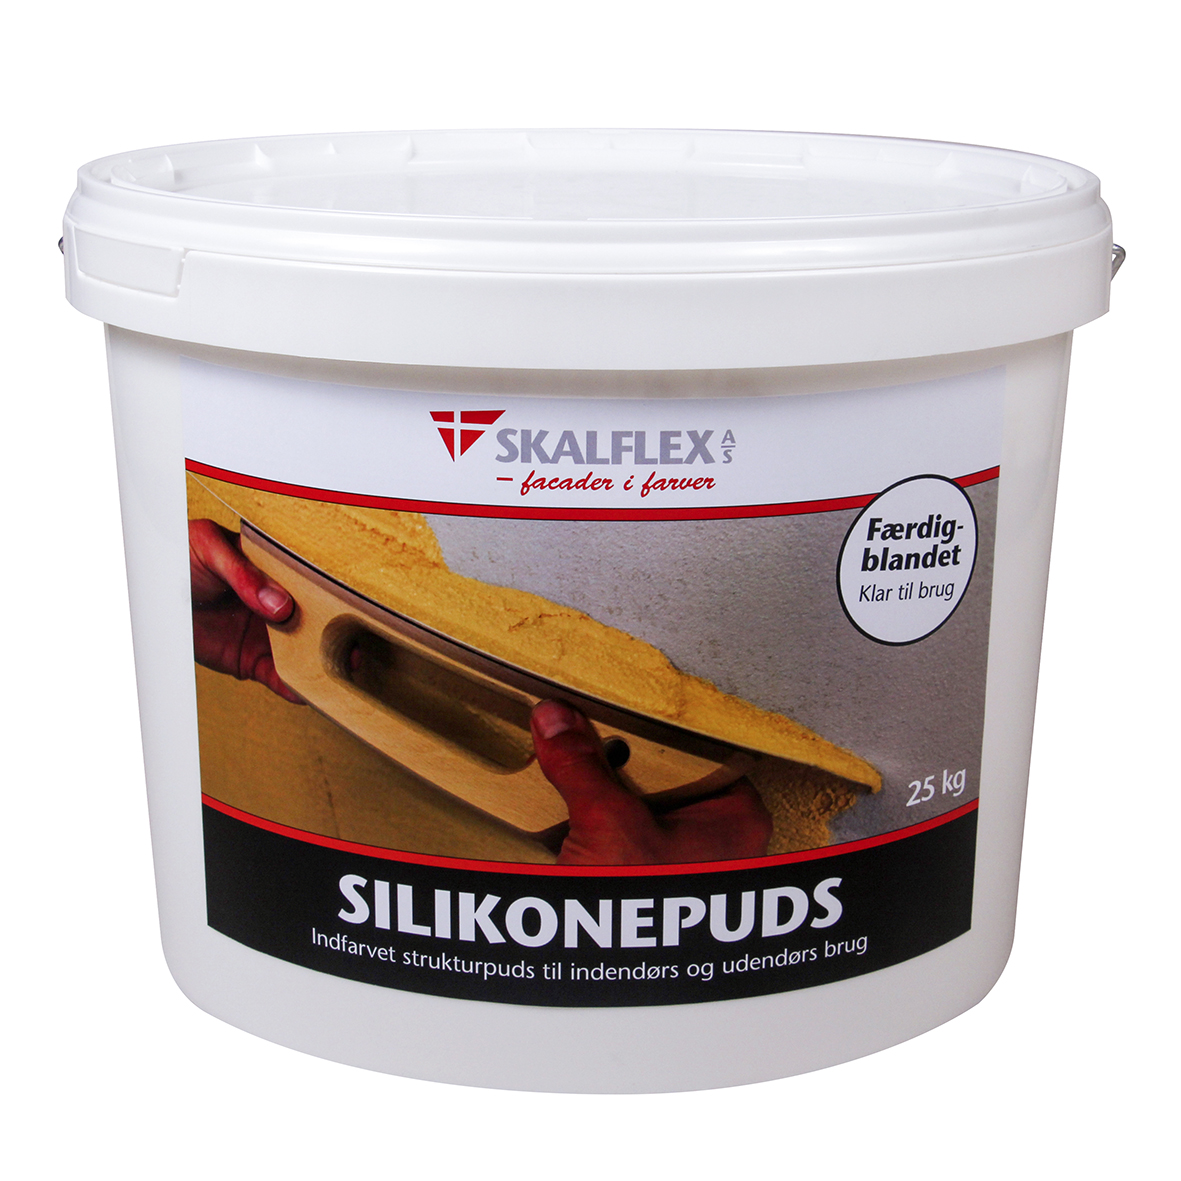 Skalflex Silikonepuds | facadebehandling – Skalflex.dk